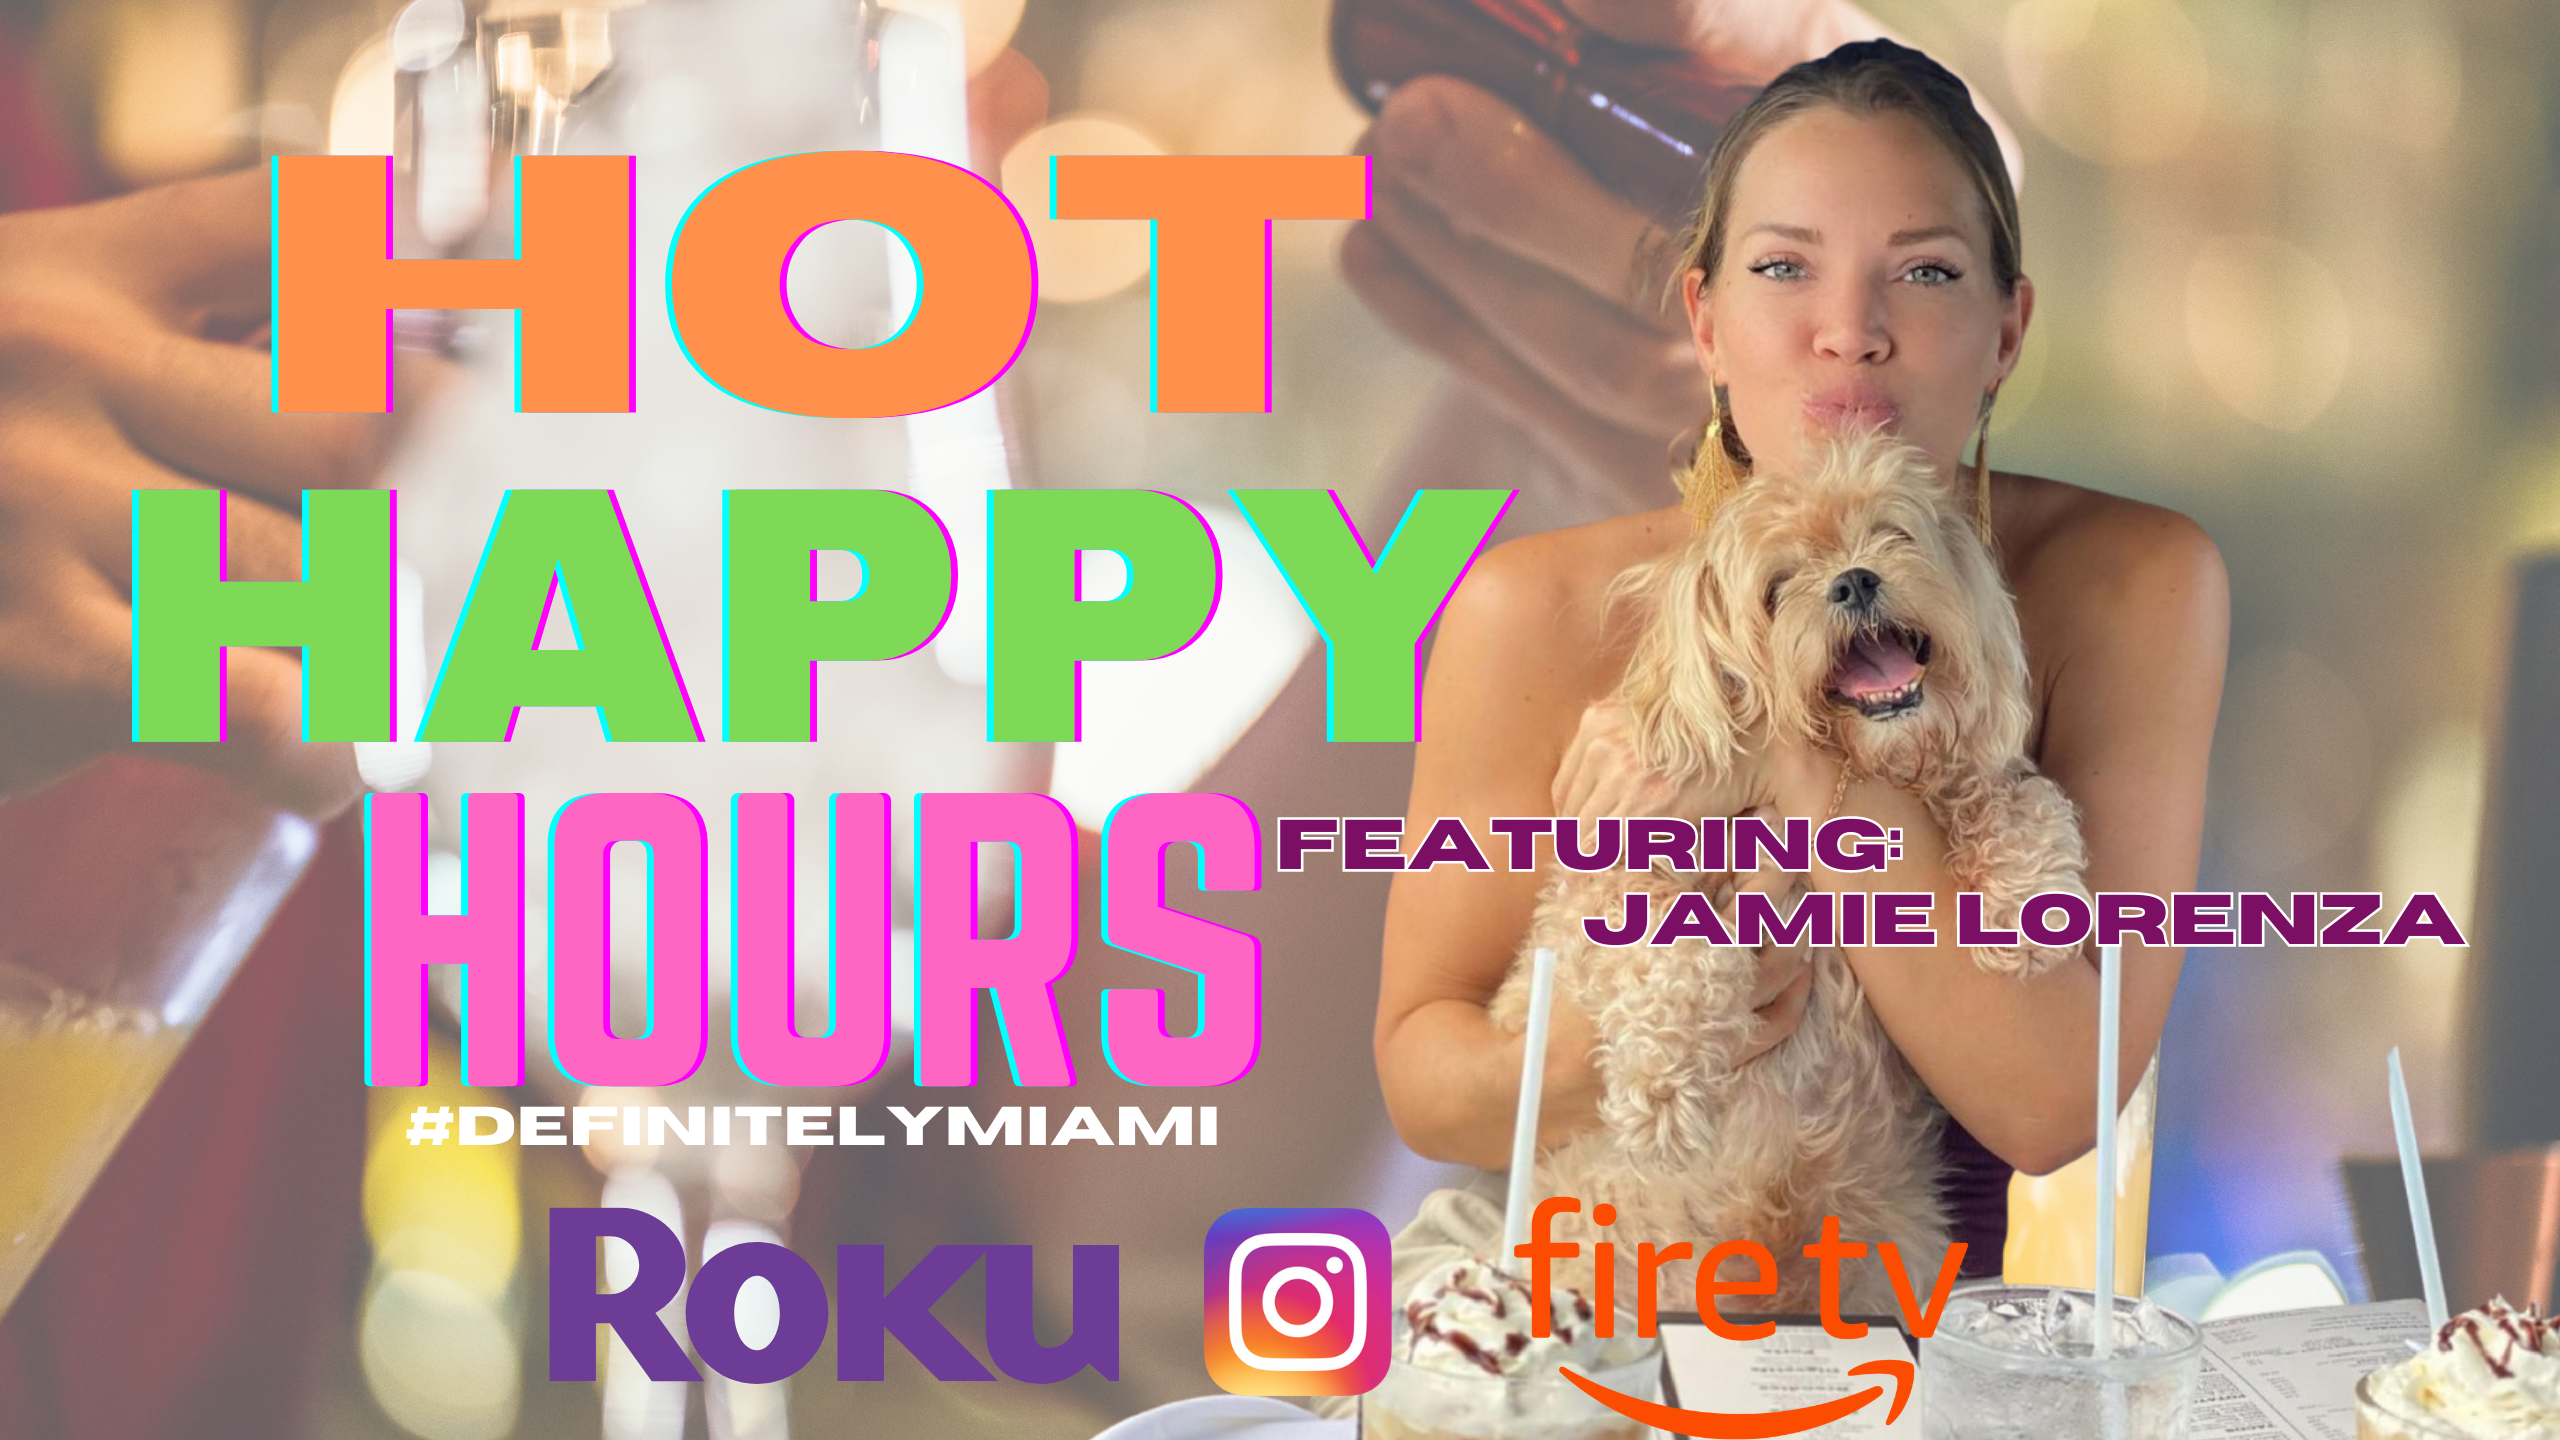 Jamie Lorenza hosts Hot Happy Hours